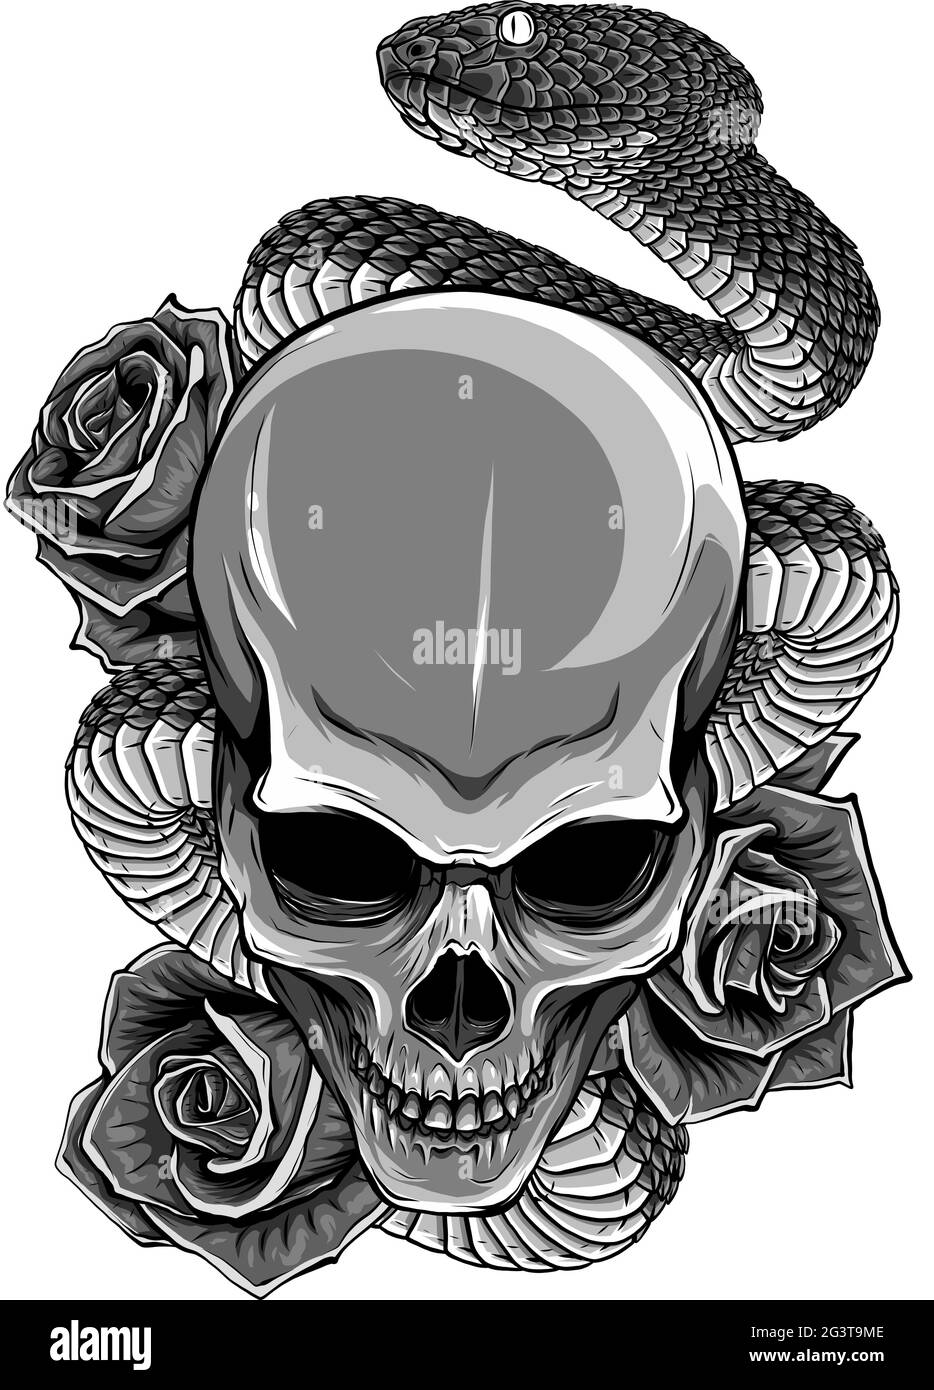 vector illustration of skull, roses and snake Stock Vector